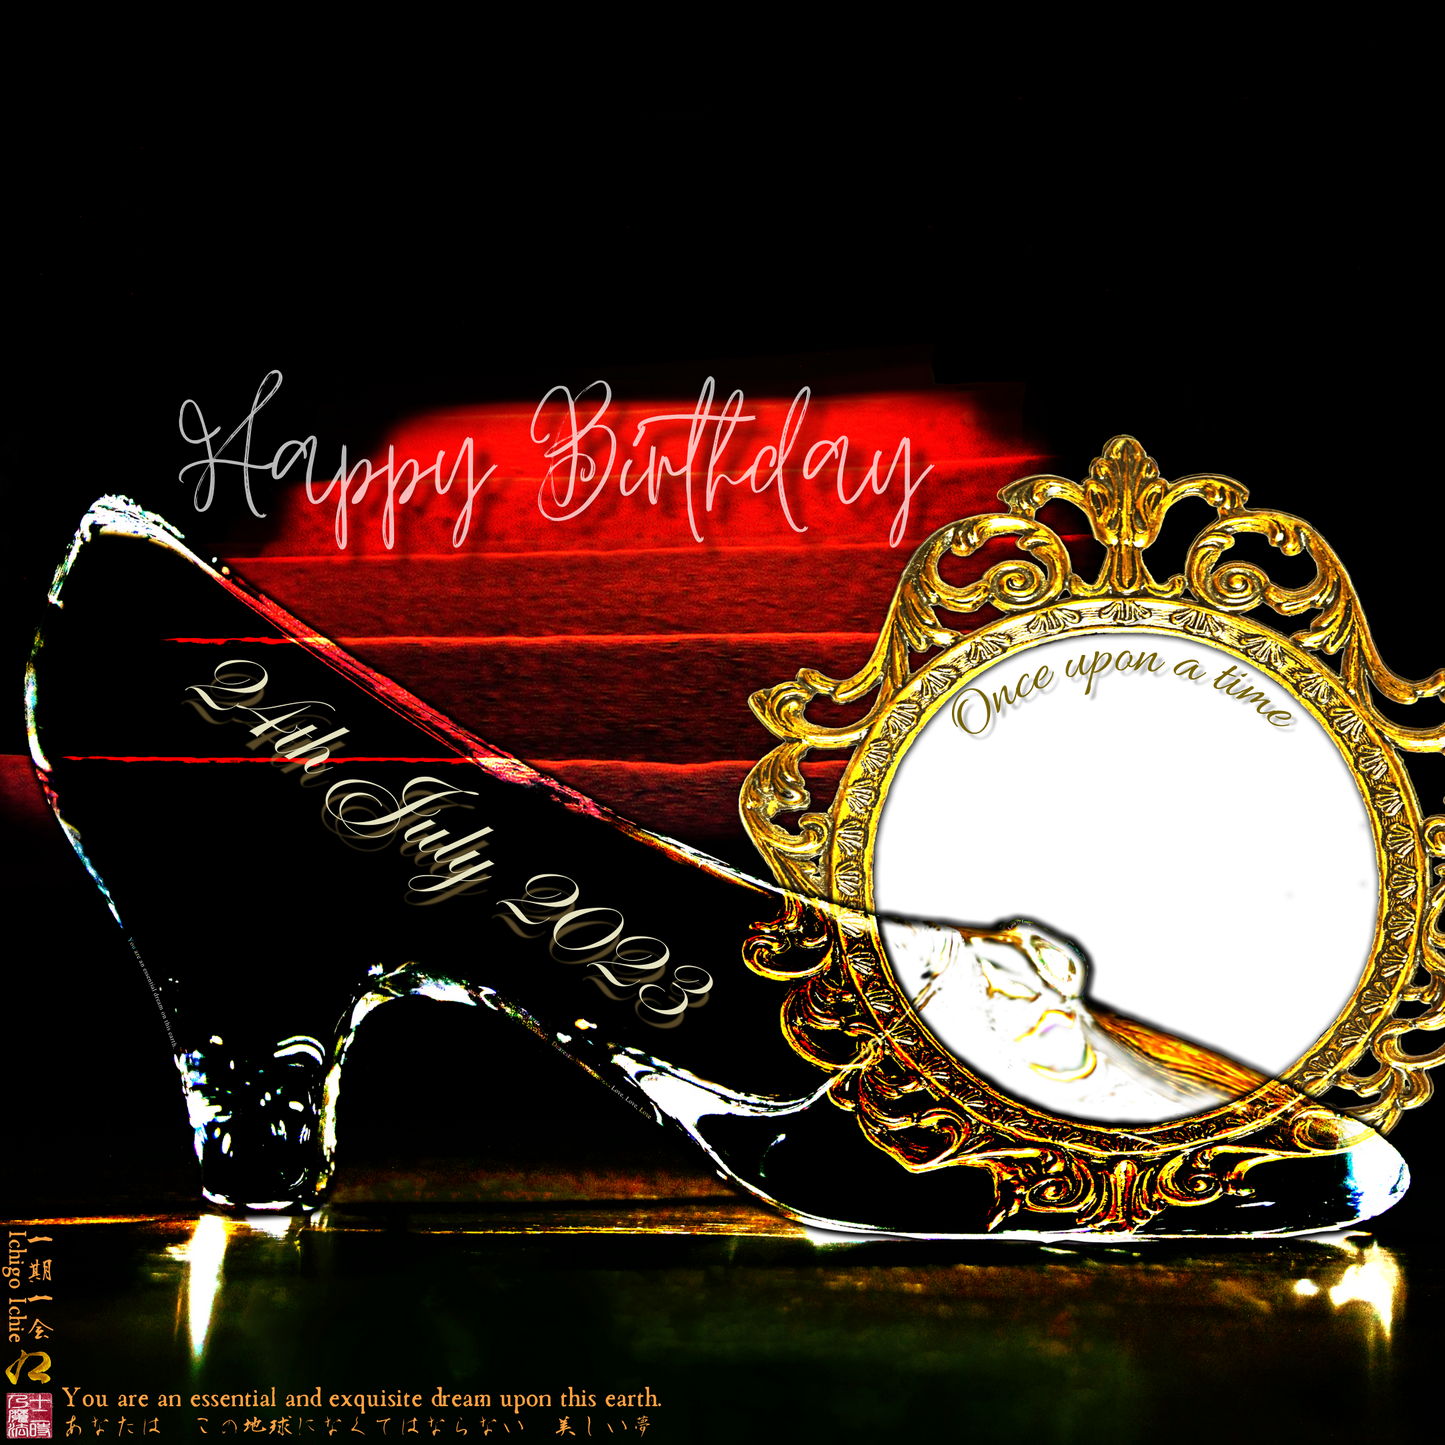 Happy Birthday Glass Slipper "Ichigo Ichie" 24th July 2023 the Right (1-of-1) NFT Art